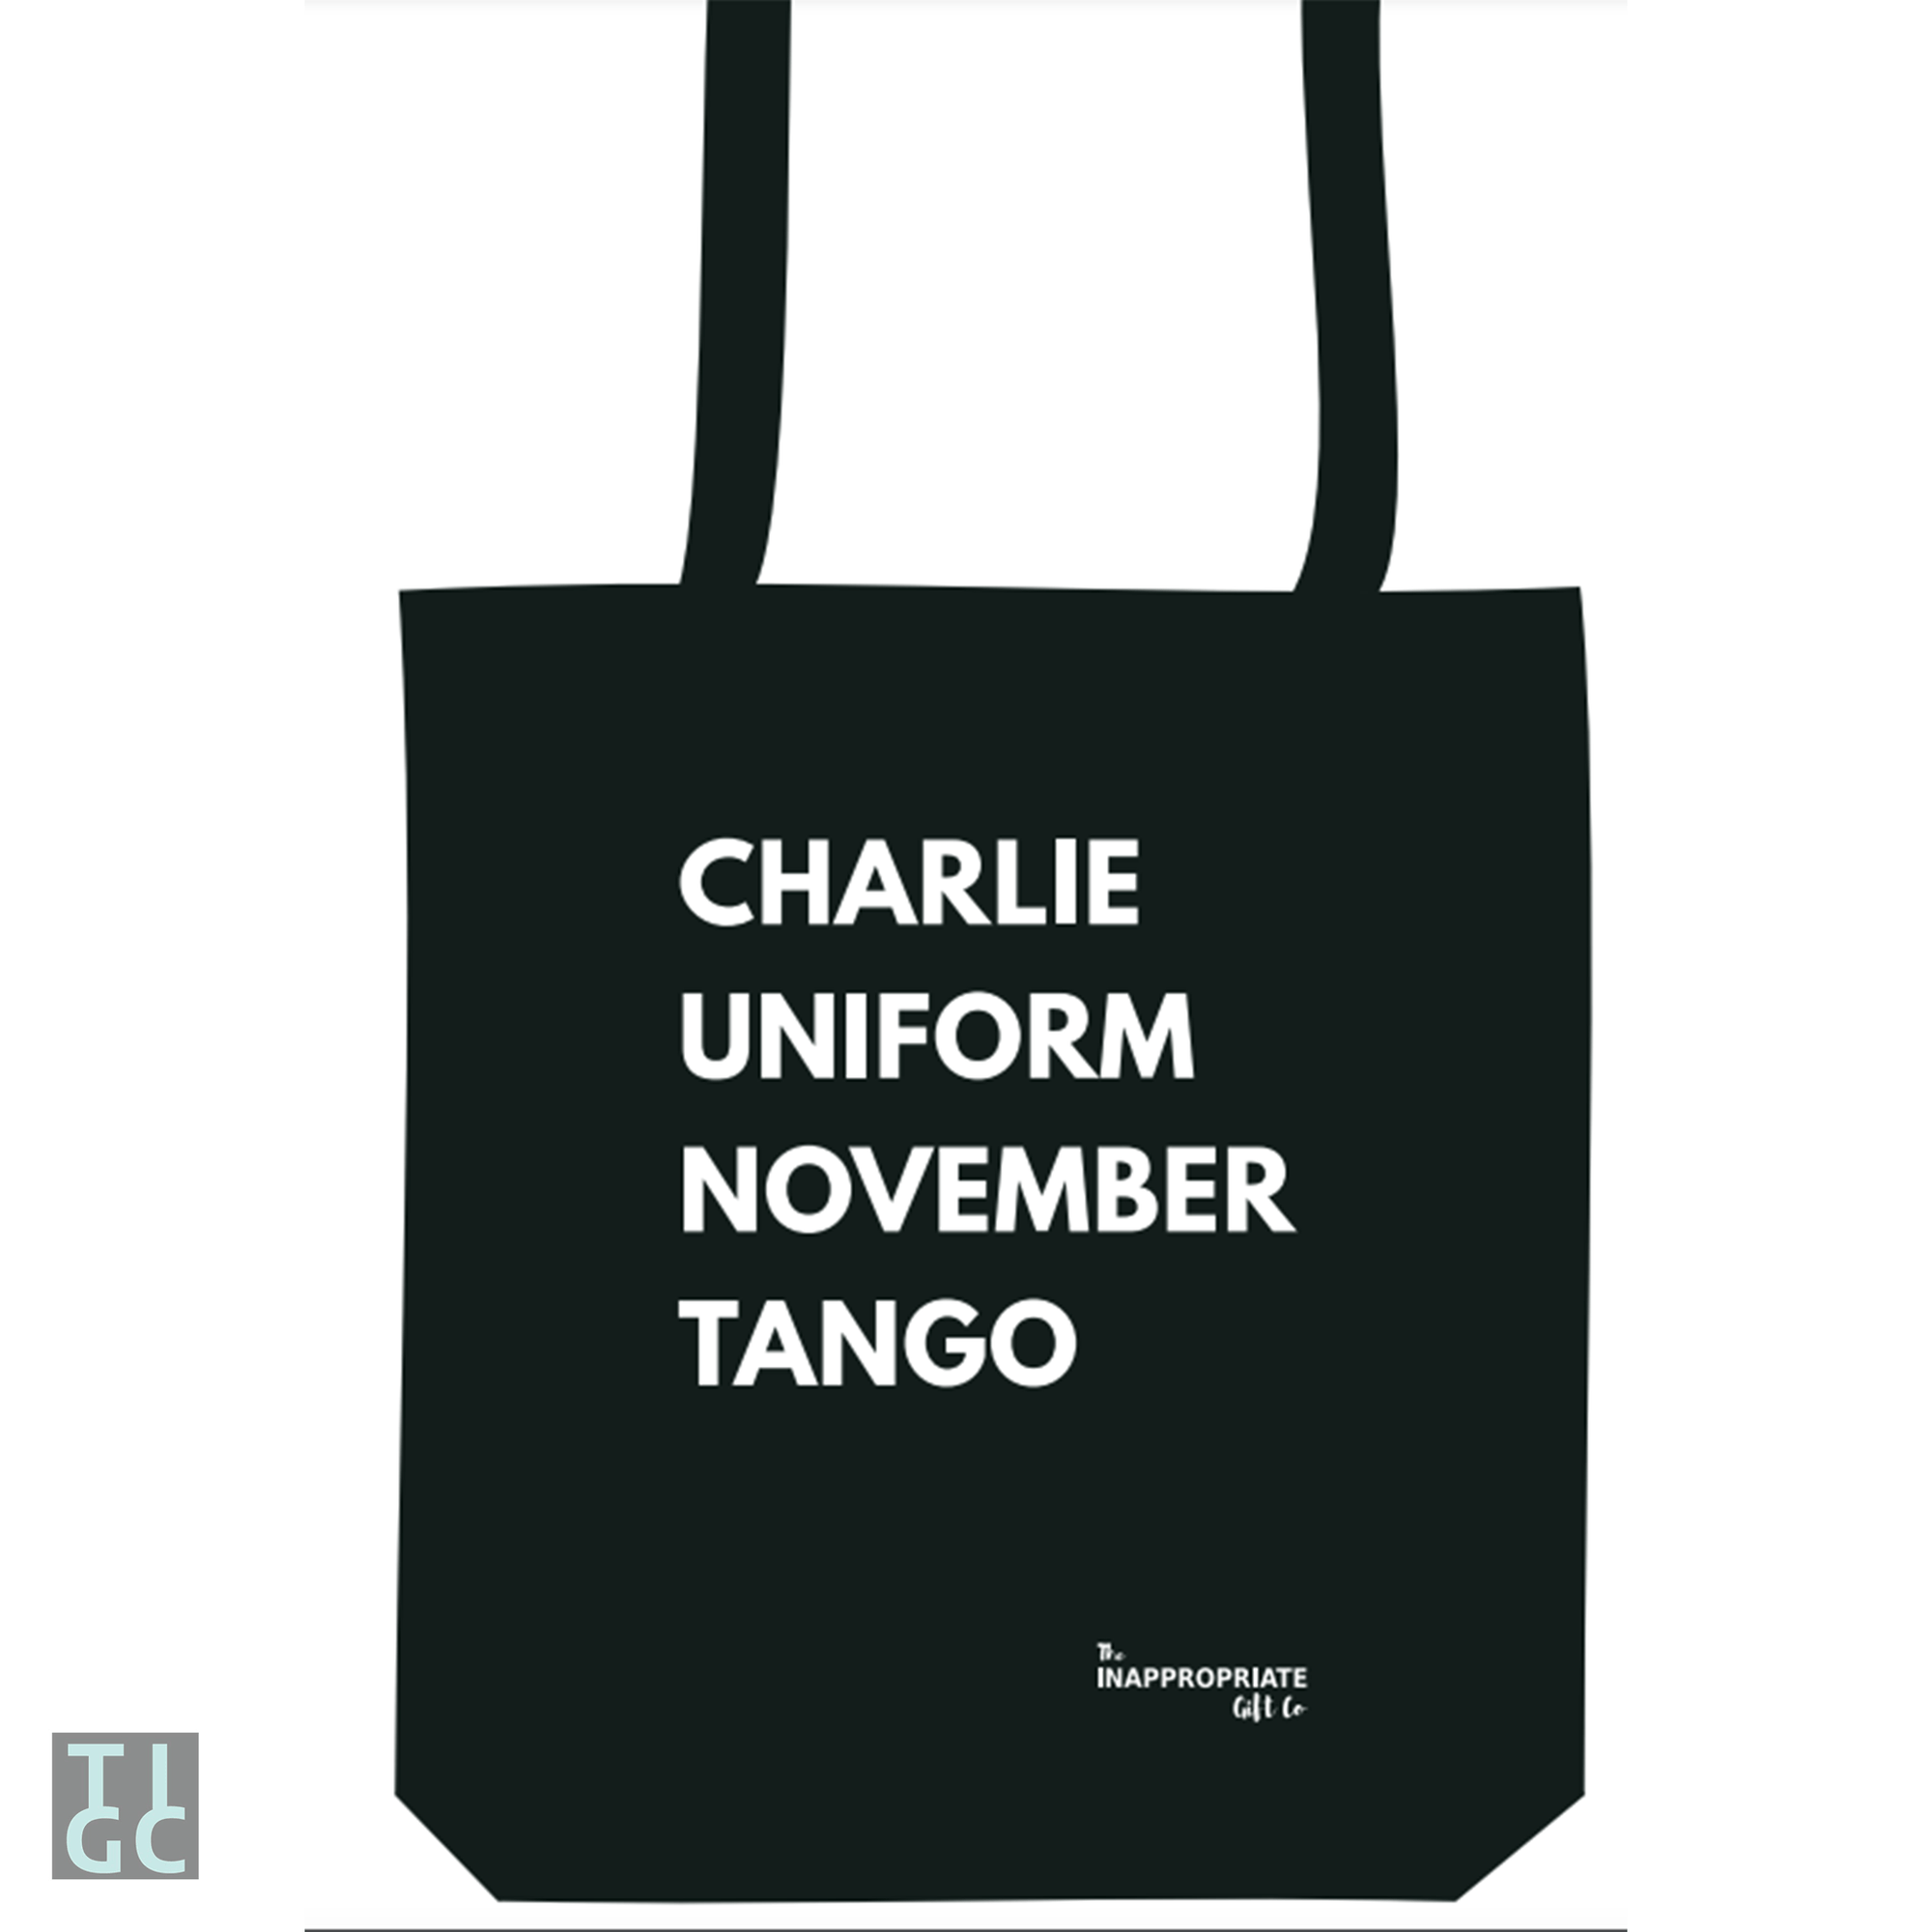 TIGC The Inappropriate Gift Co Charlie Uniform November Tango Tote Bag 